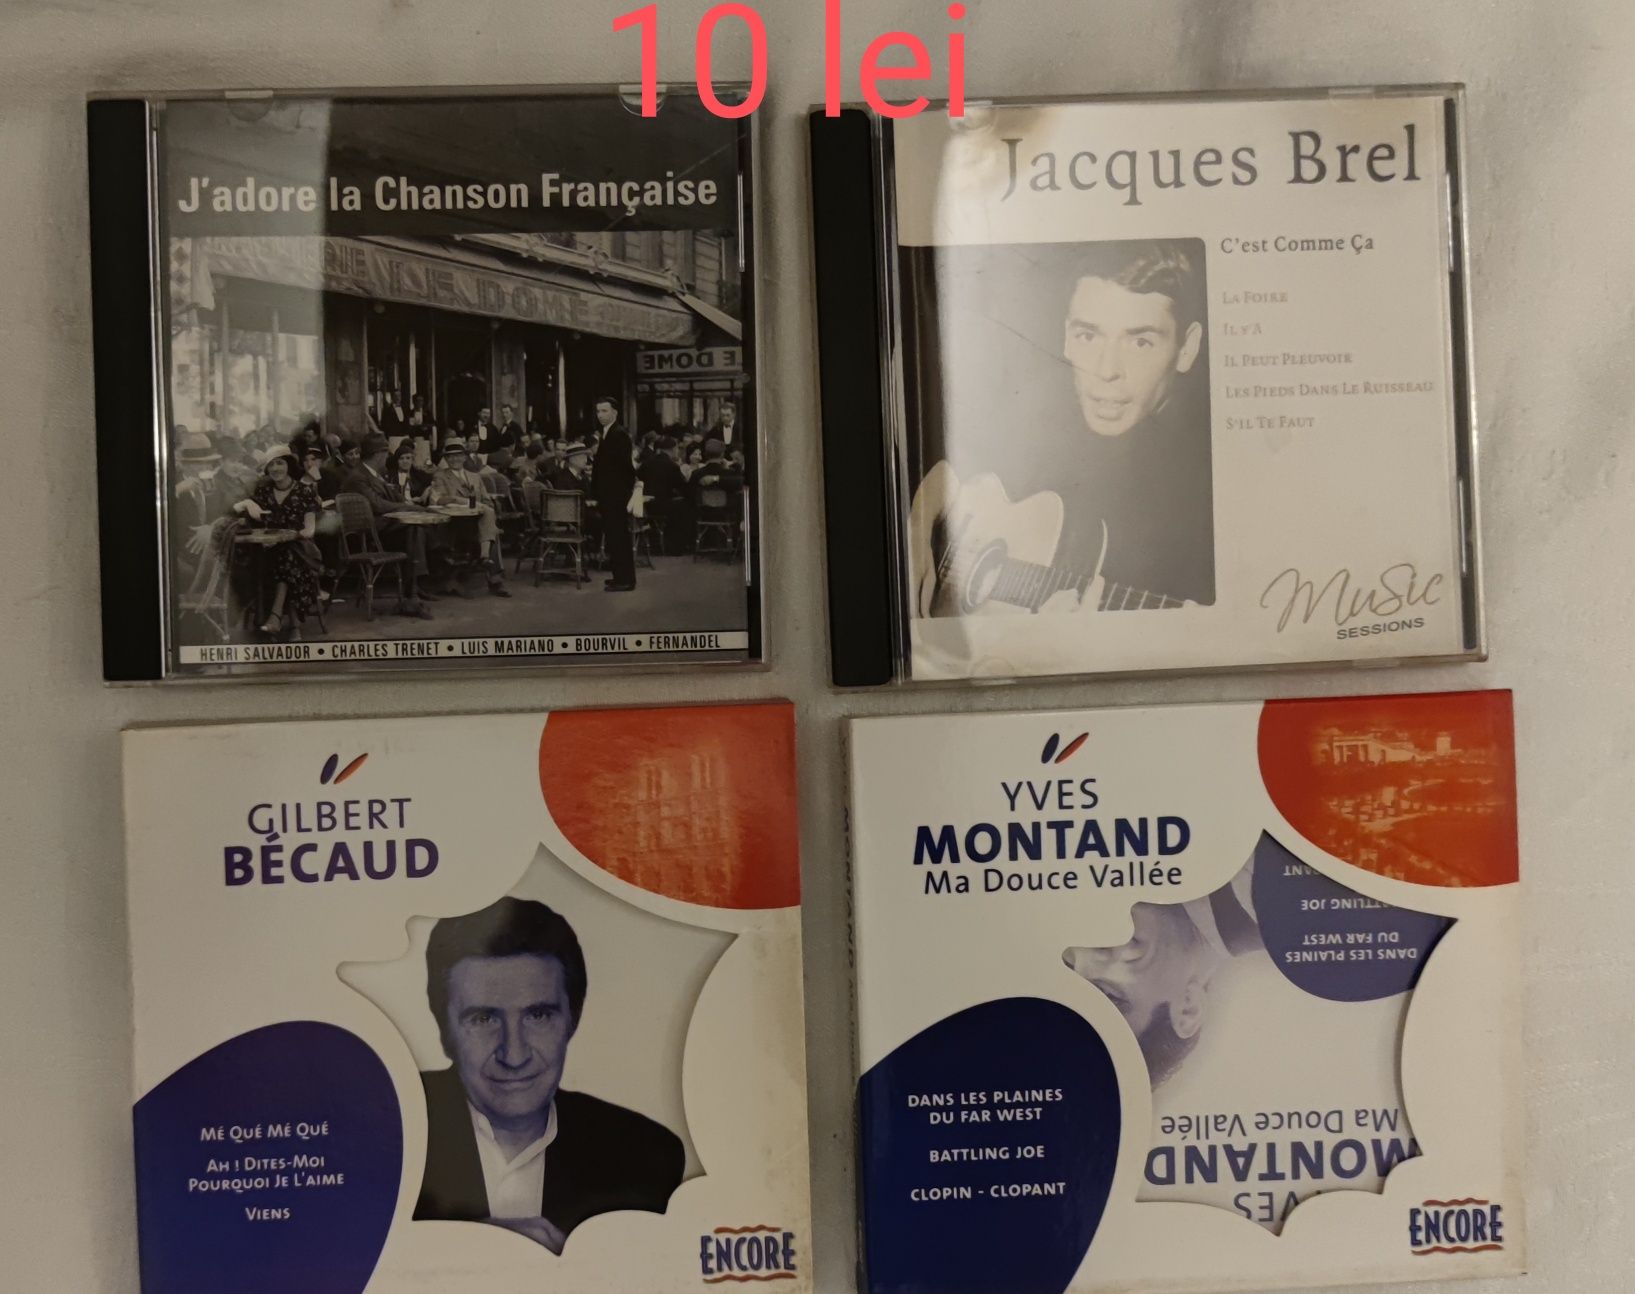 Colectie CD muzica frantuzeasca - Brel, Yves Montand, etc.